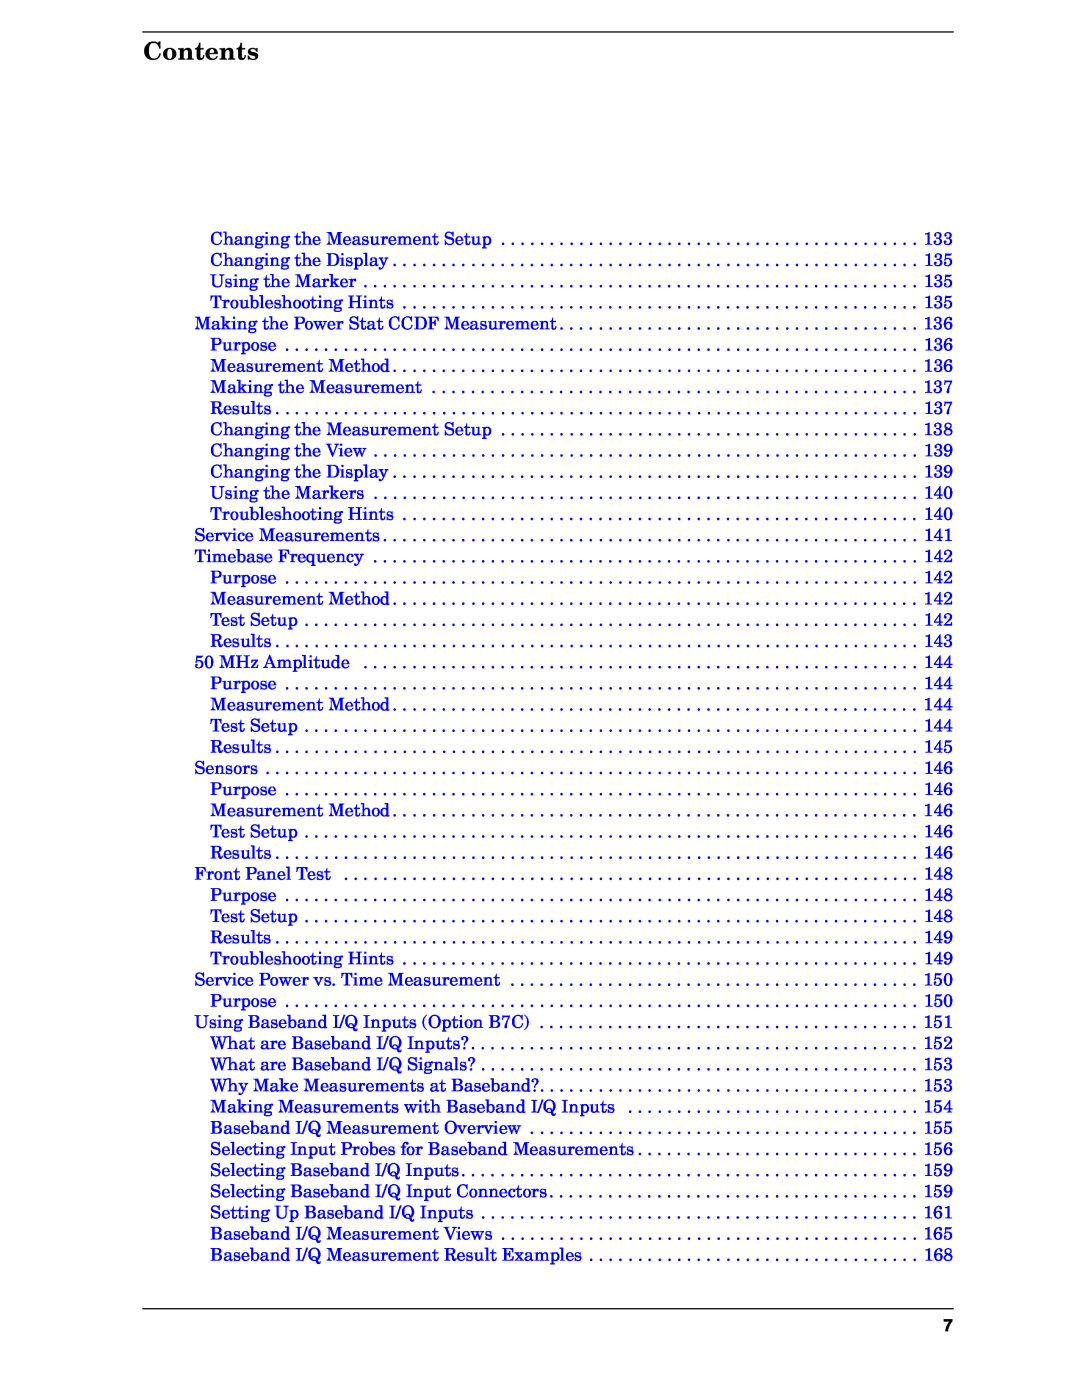 Agilent Technologies E4406A manual Contents 